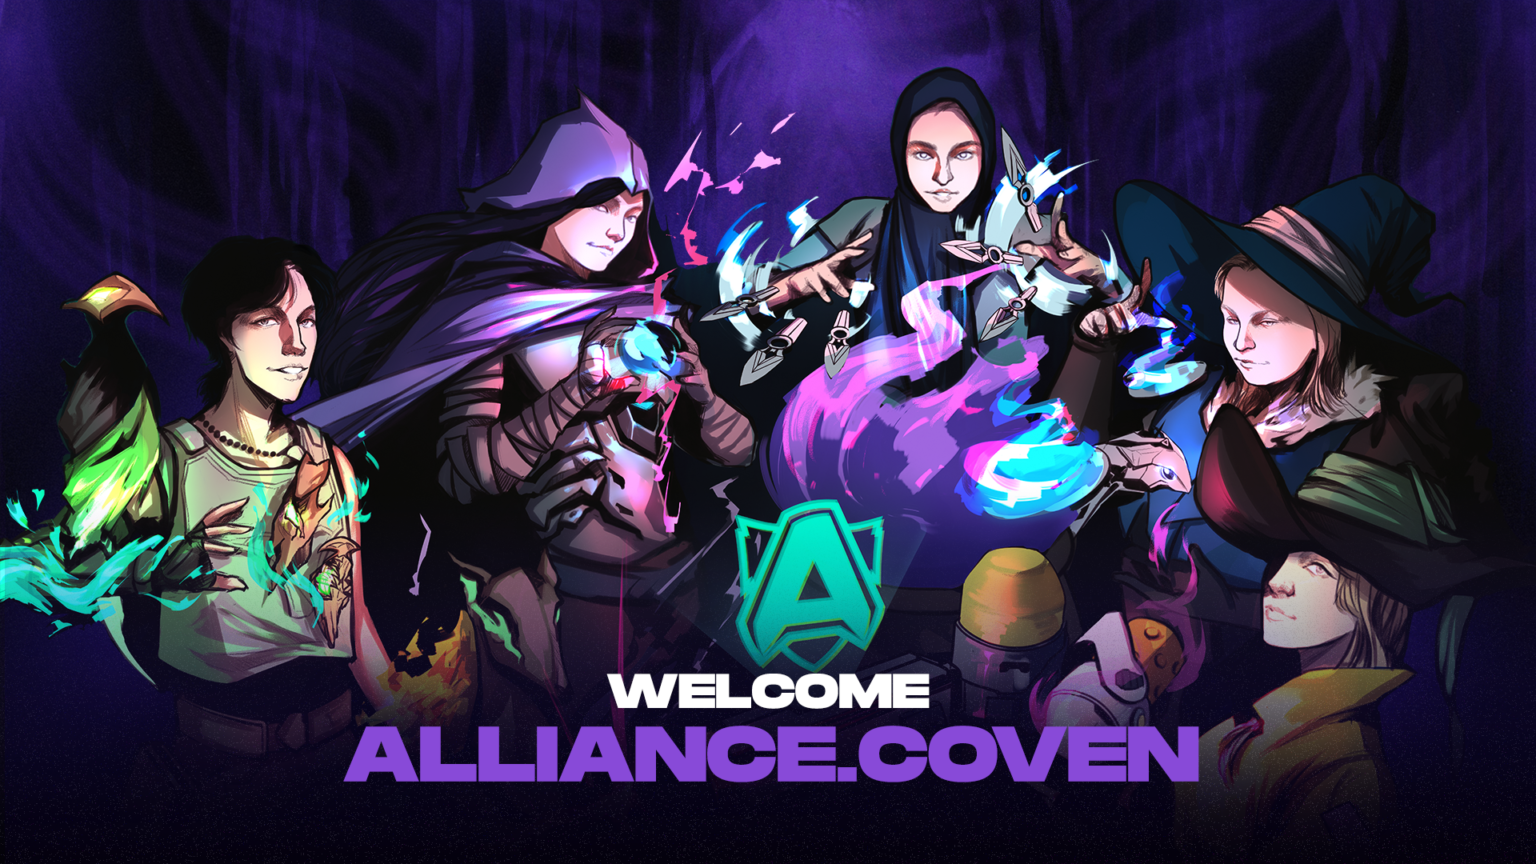 Alliance.coven 1536x864